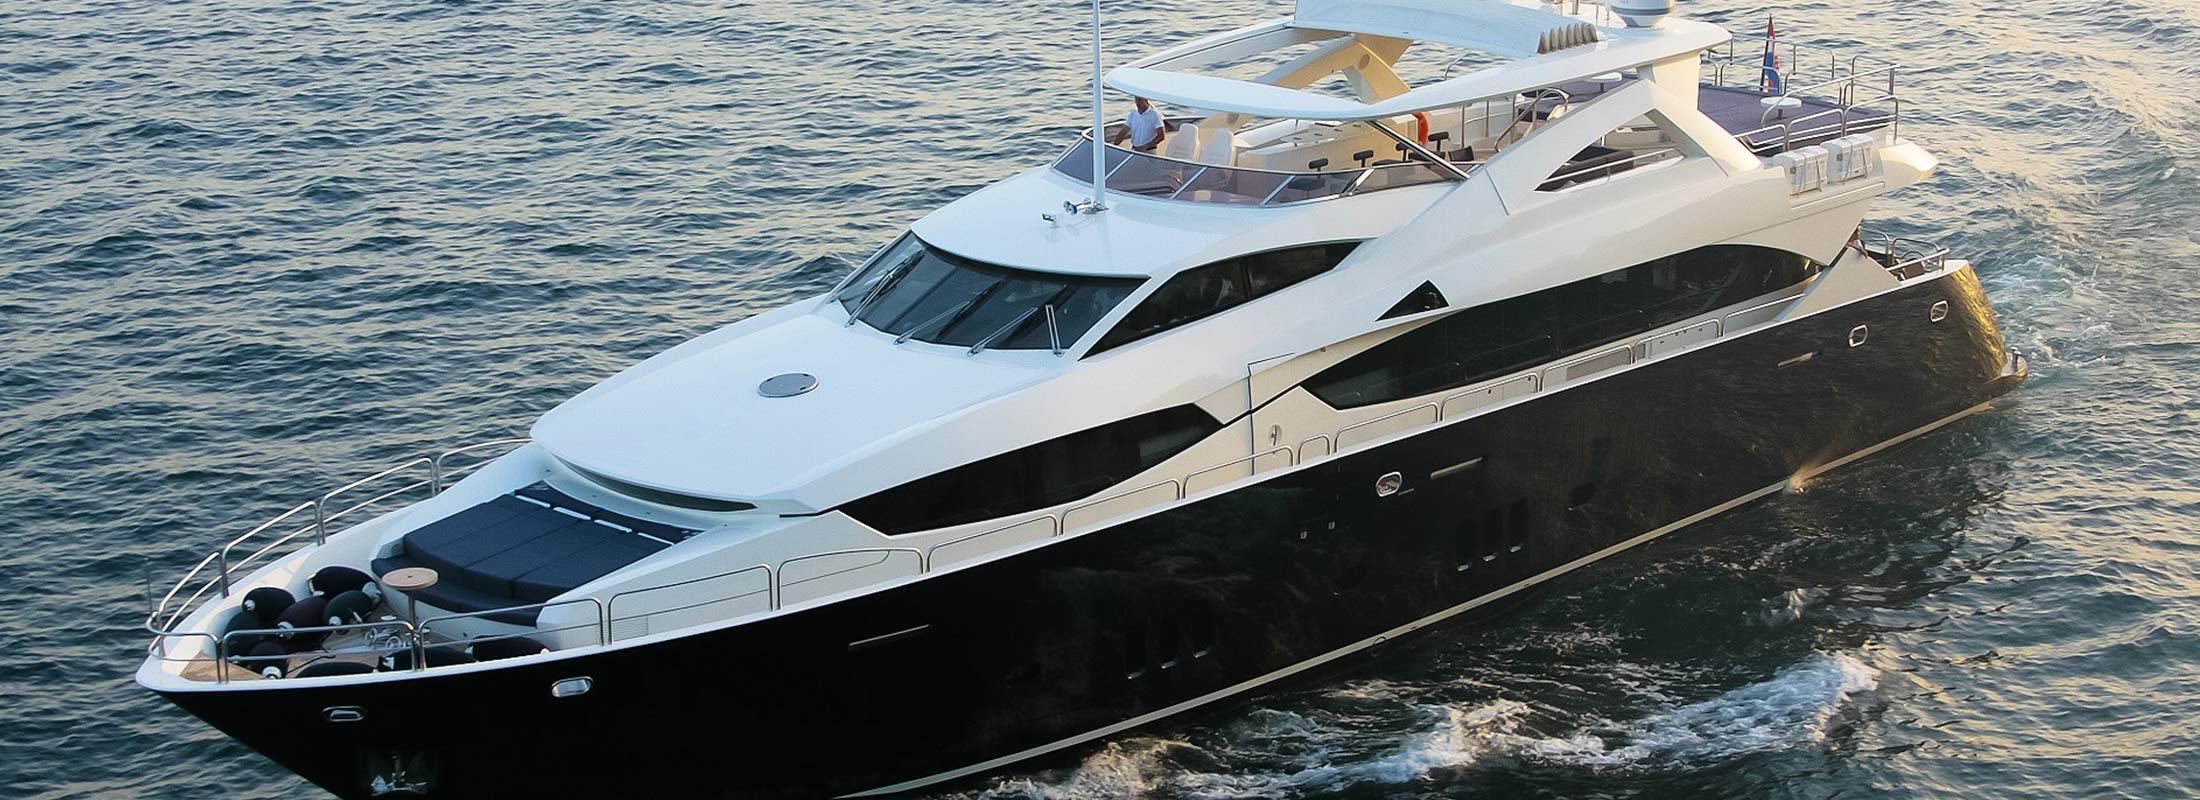 Cassiopeia Motor Yacht for Charter Mediterranean slider 1